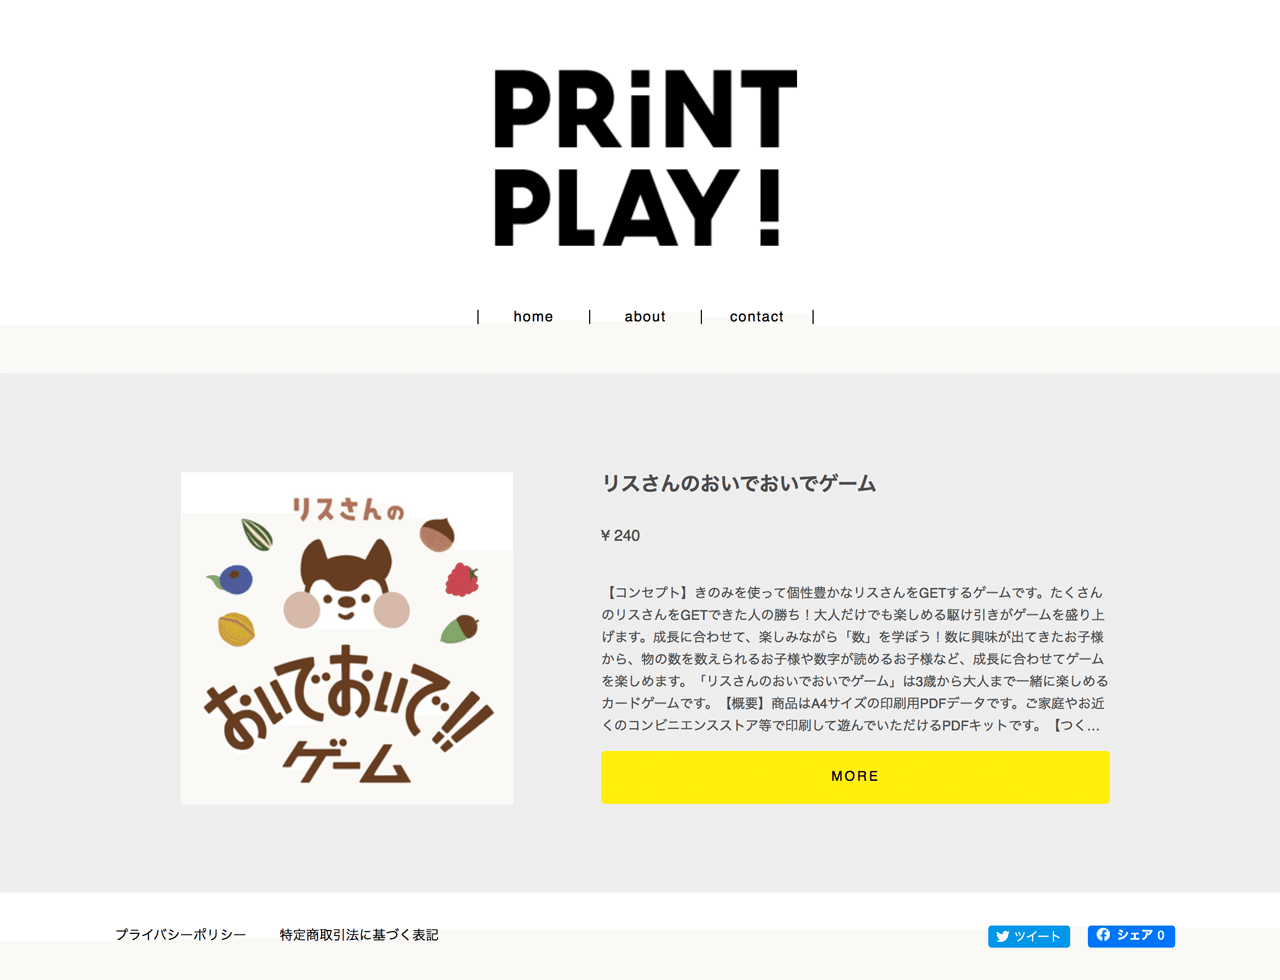 Print Play プリントアンドプレイ お家で印刷するアナログゲームの魅力と可能性 Print Play Note